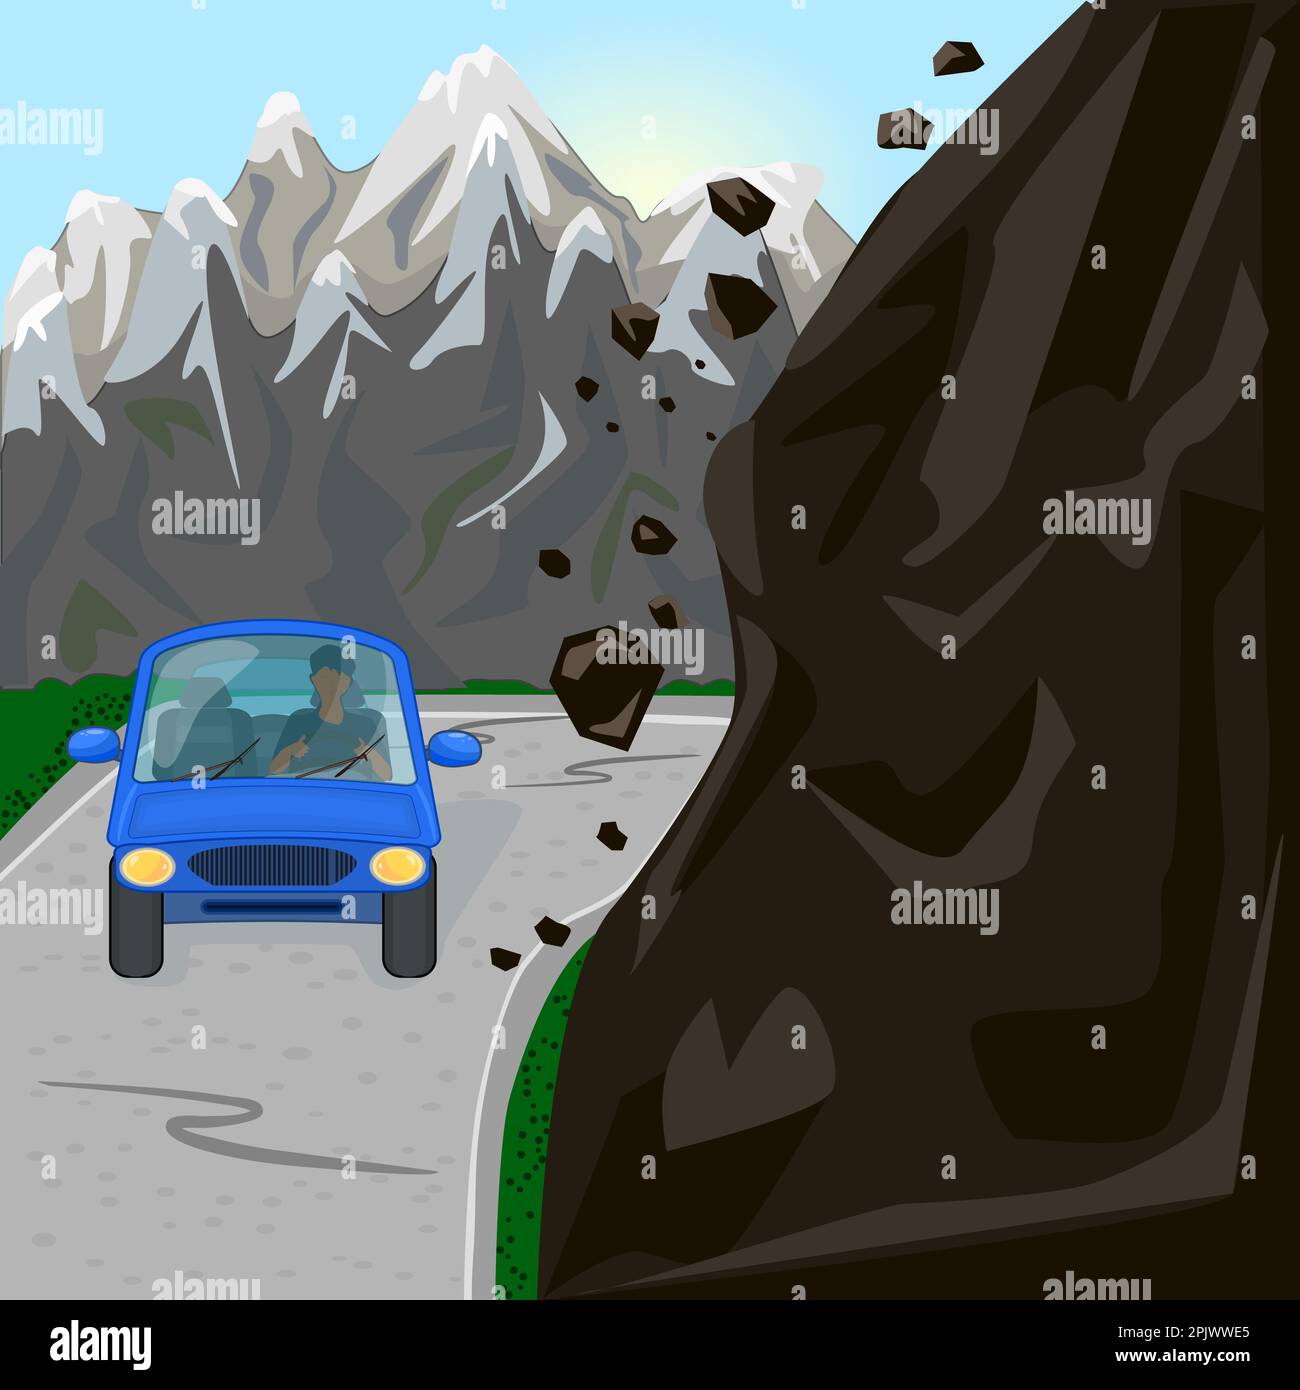 Rock fall on road. Mountain landslide with slide rocks and car on roadway.Natural disaster, earthquake, mudslide or danger concept.Vector illustration Stock Vector